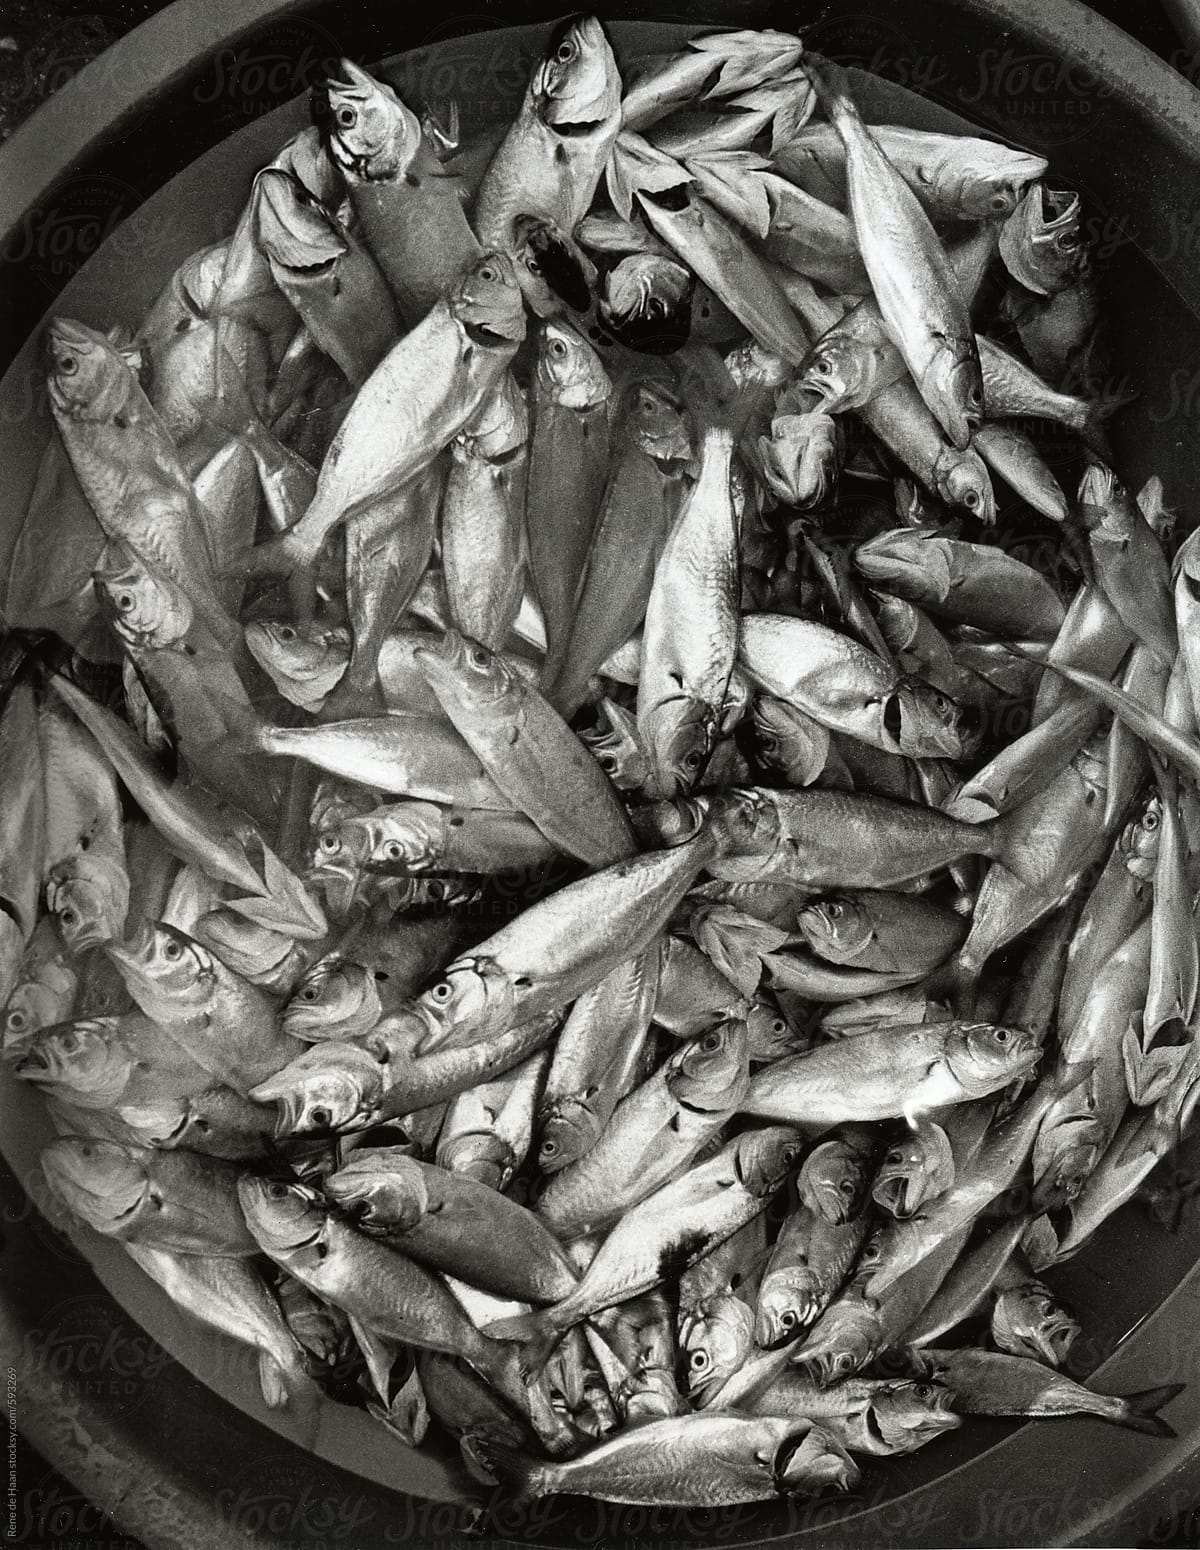 Bucket Full Of Small Fish by Stocksy Contributor Rene De Haan - Stocksy